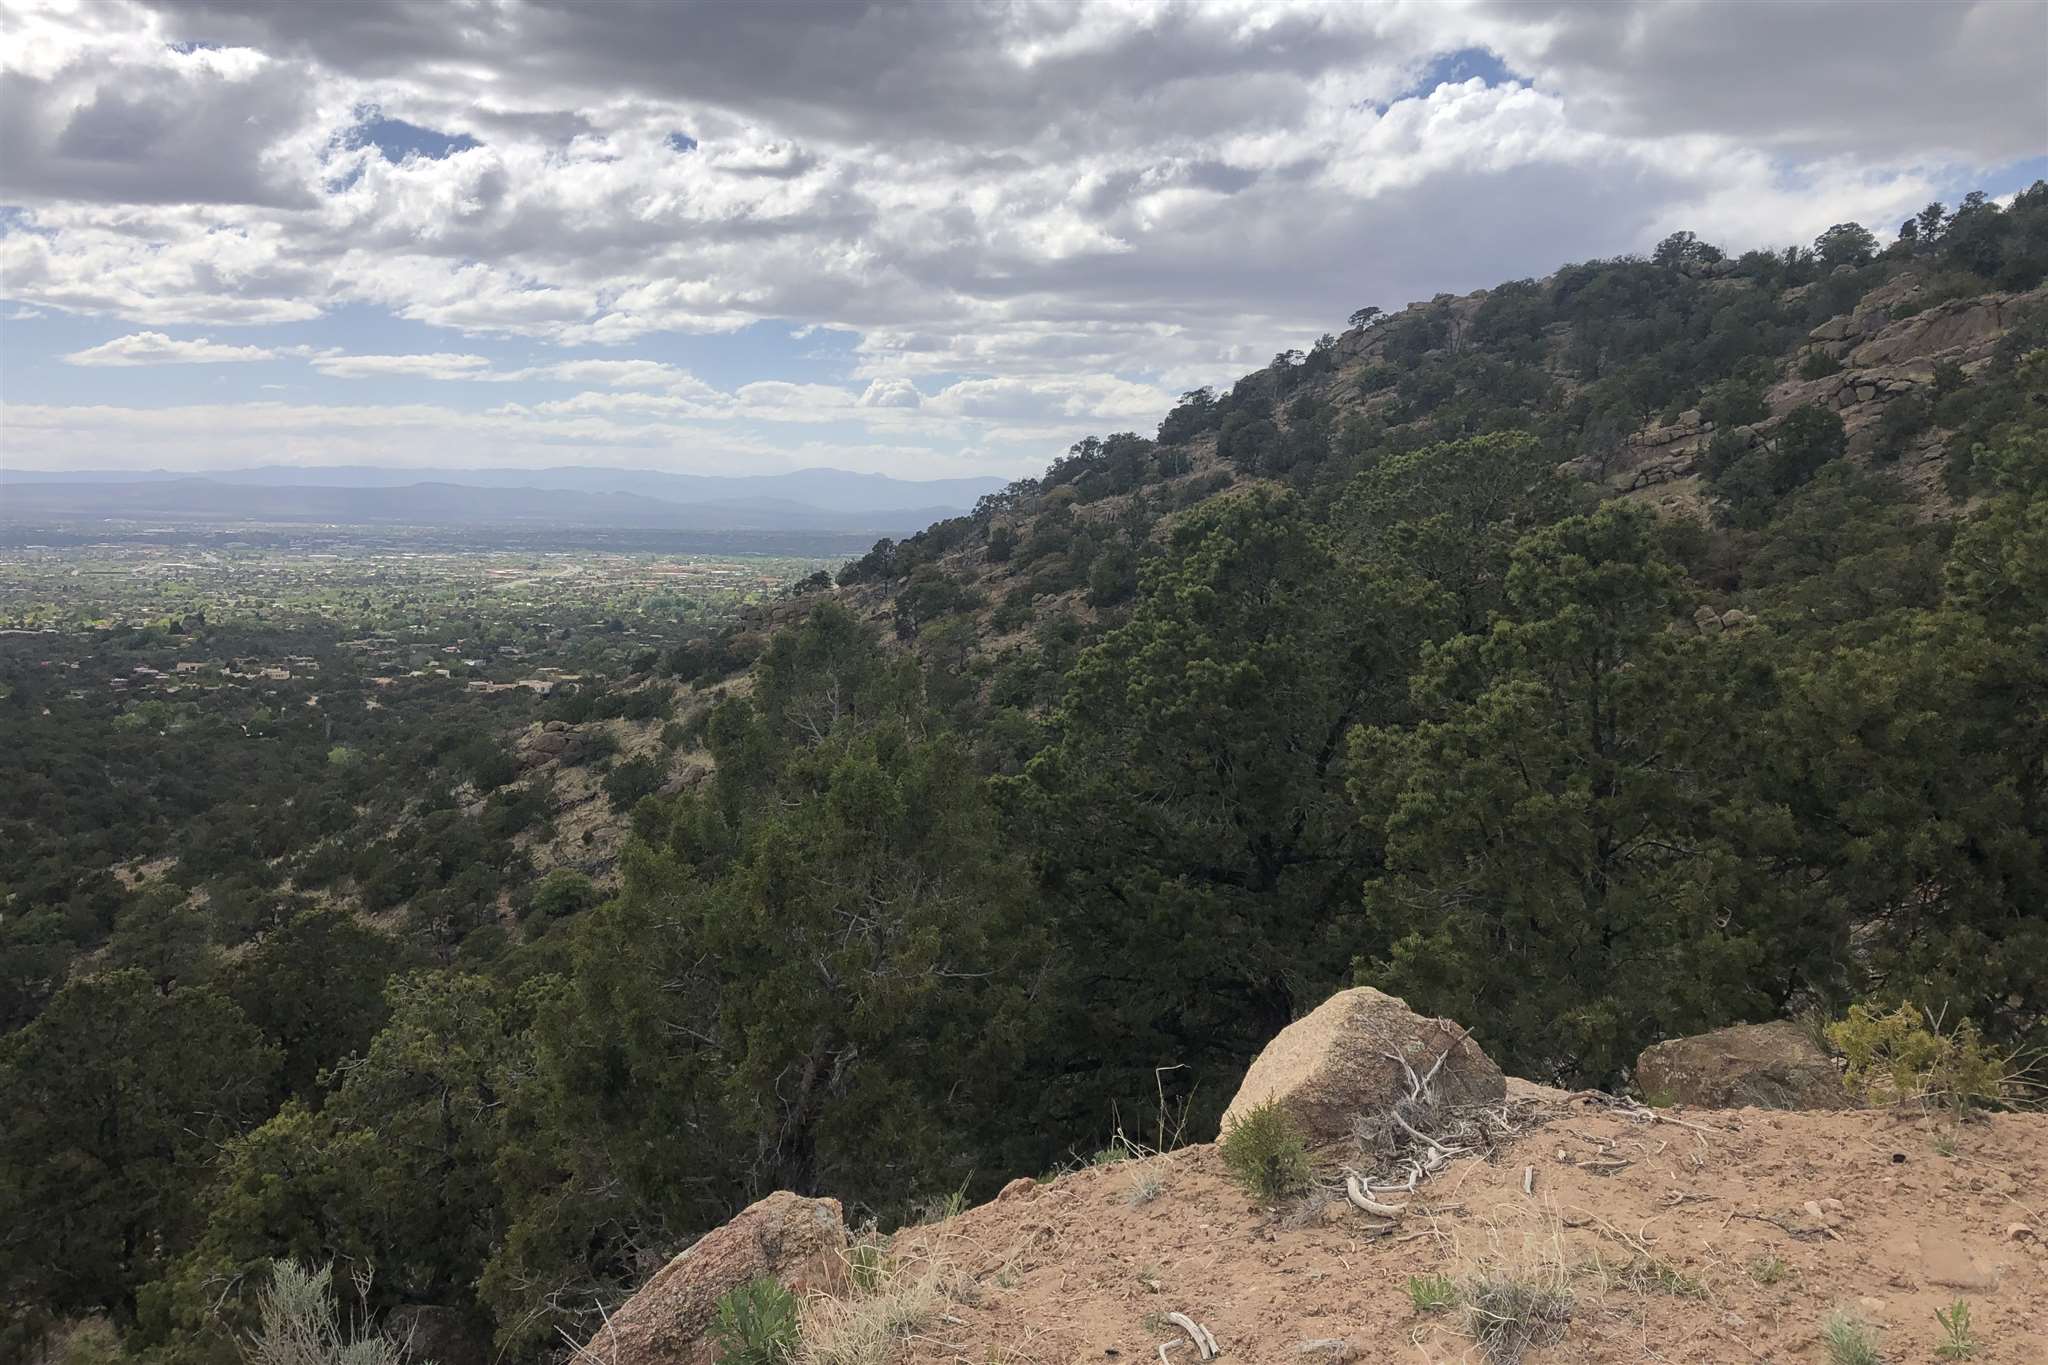 30 Cloudstone, Santa Fe, New Mexico 87505, ,Land,For Sale,30 Cloudstone,201902328